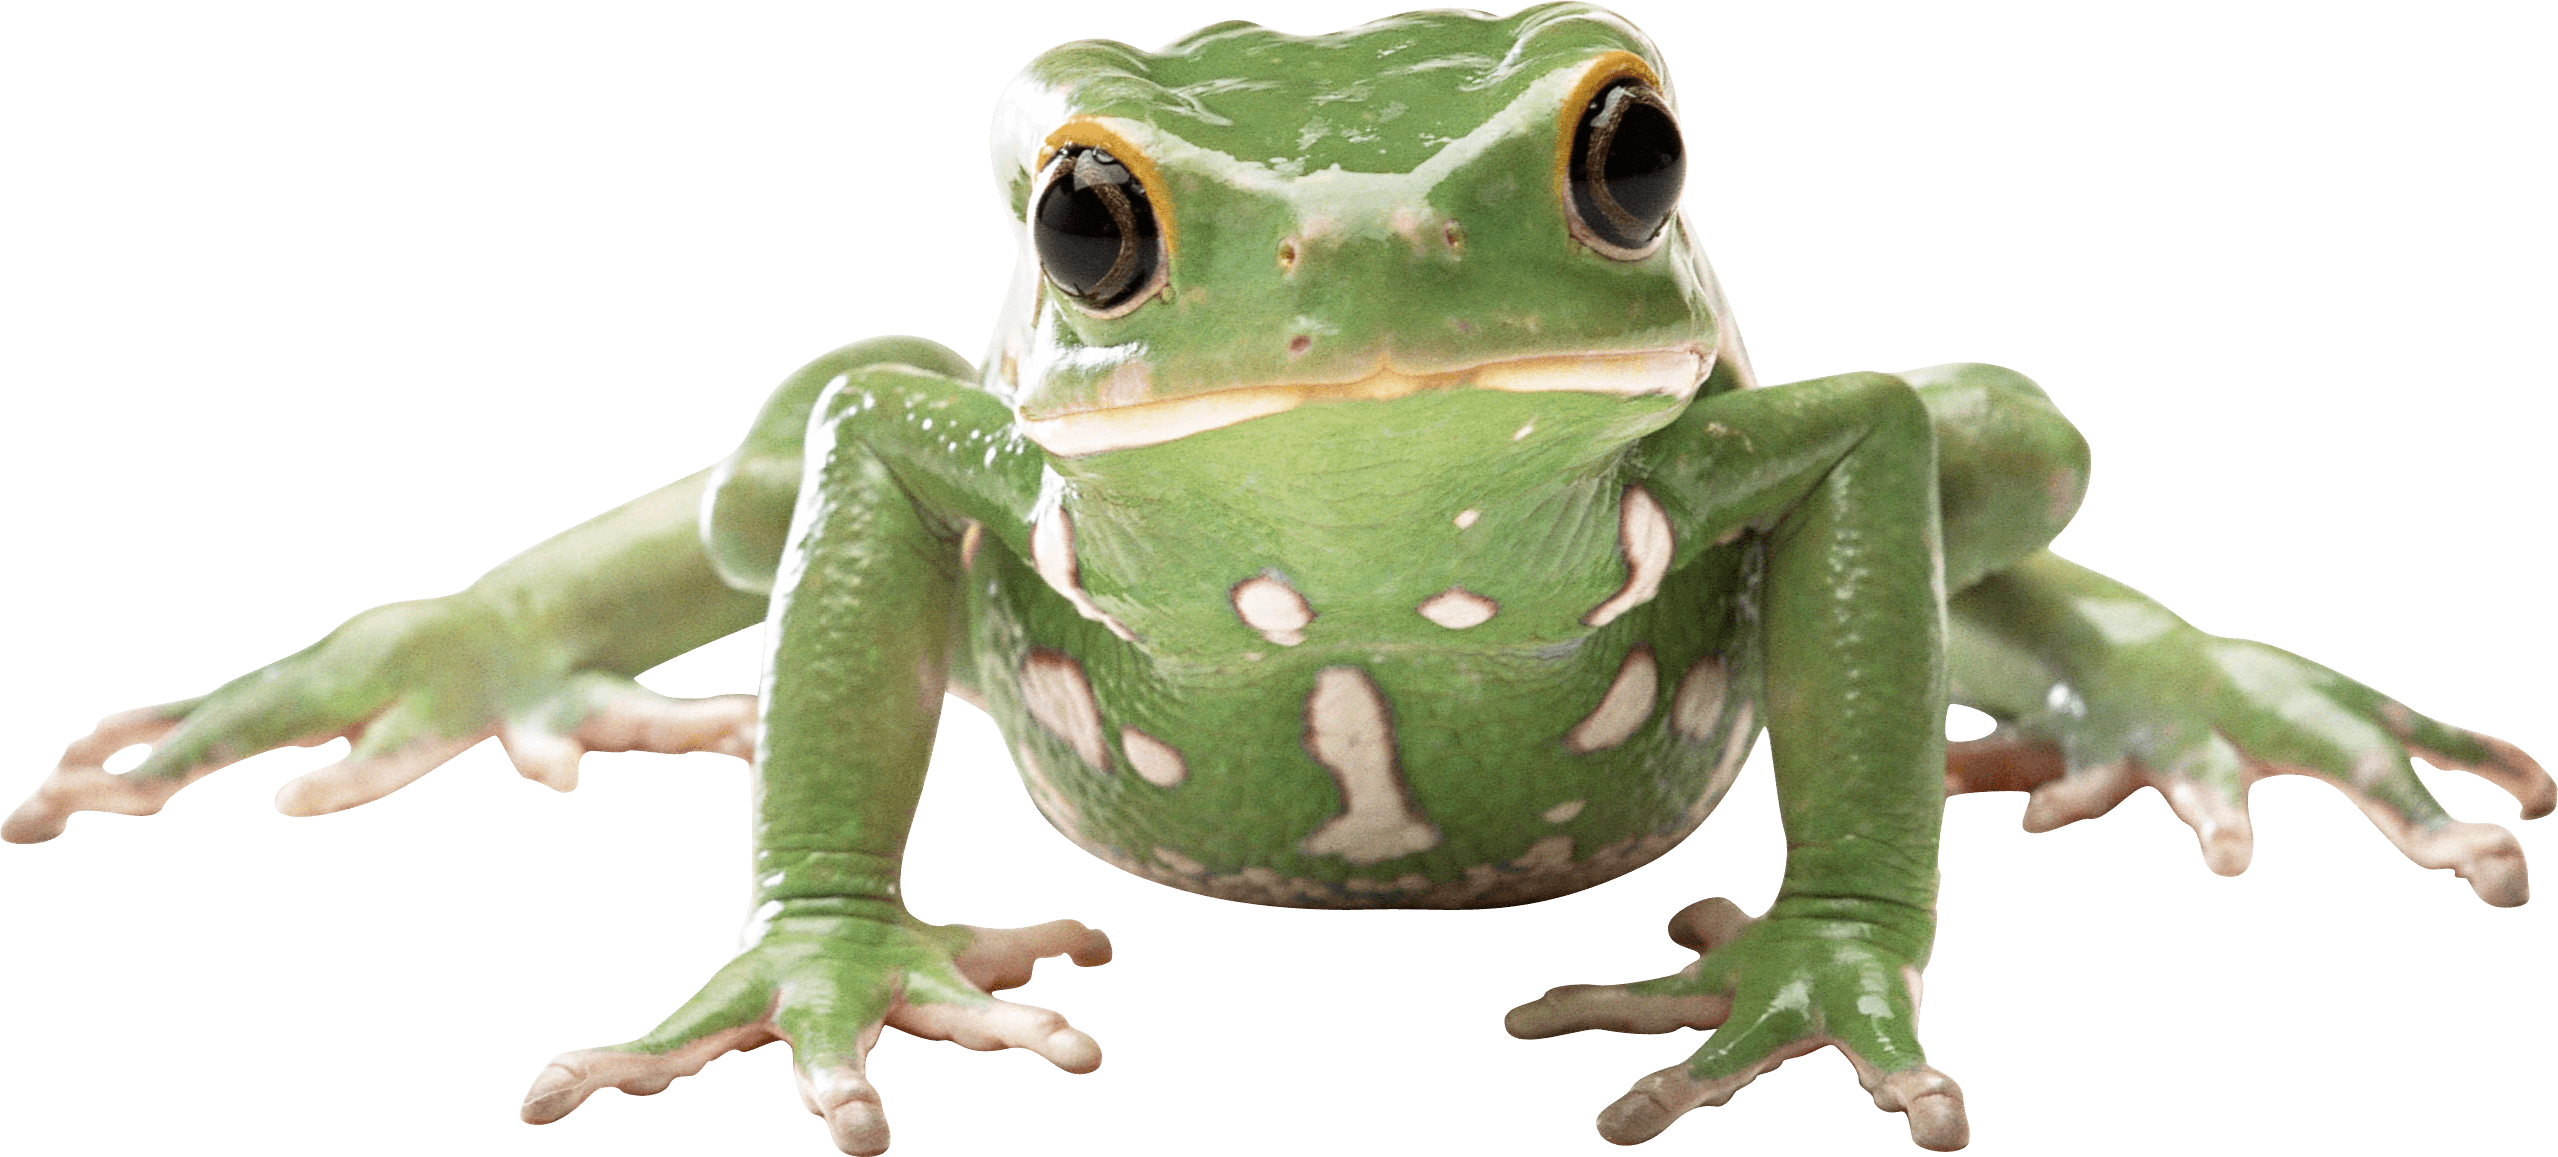 green frog PNG Image